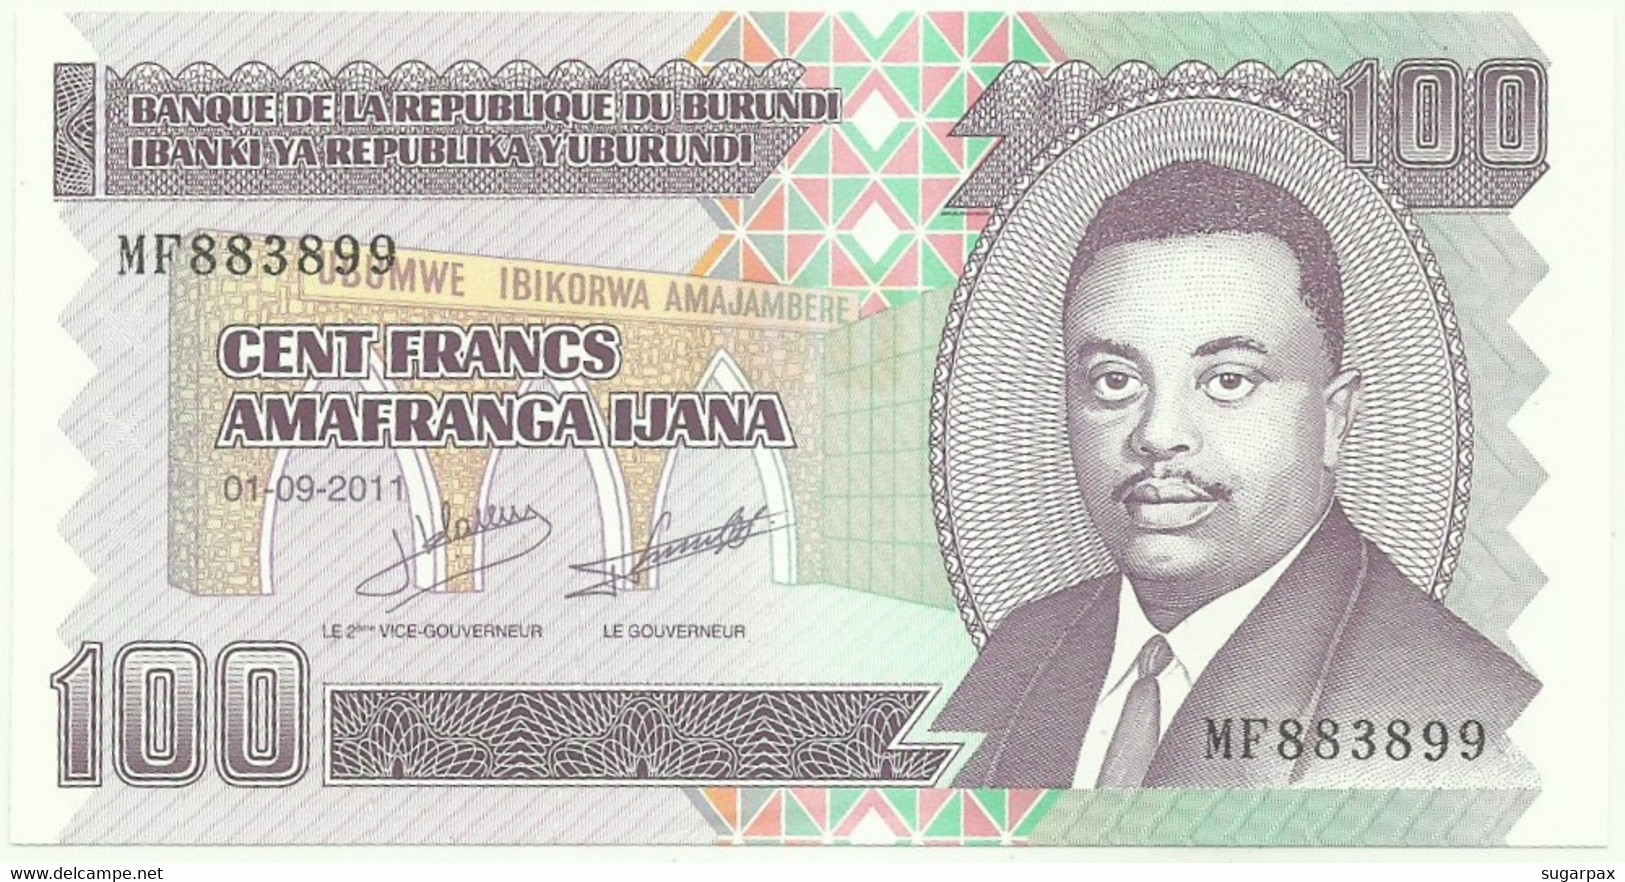 BURUNDI - 100 FRANCS - 01/09/2011 - Pick 44.b - UNC. - Série MF - Prince Rwagasore - Burundi